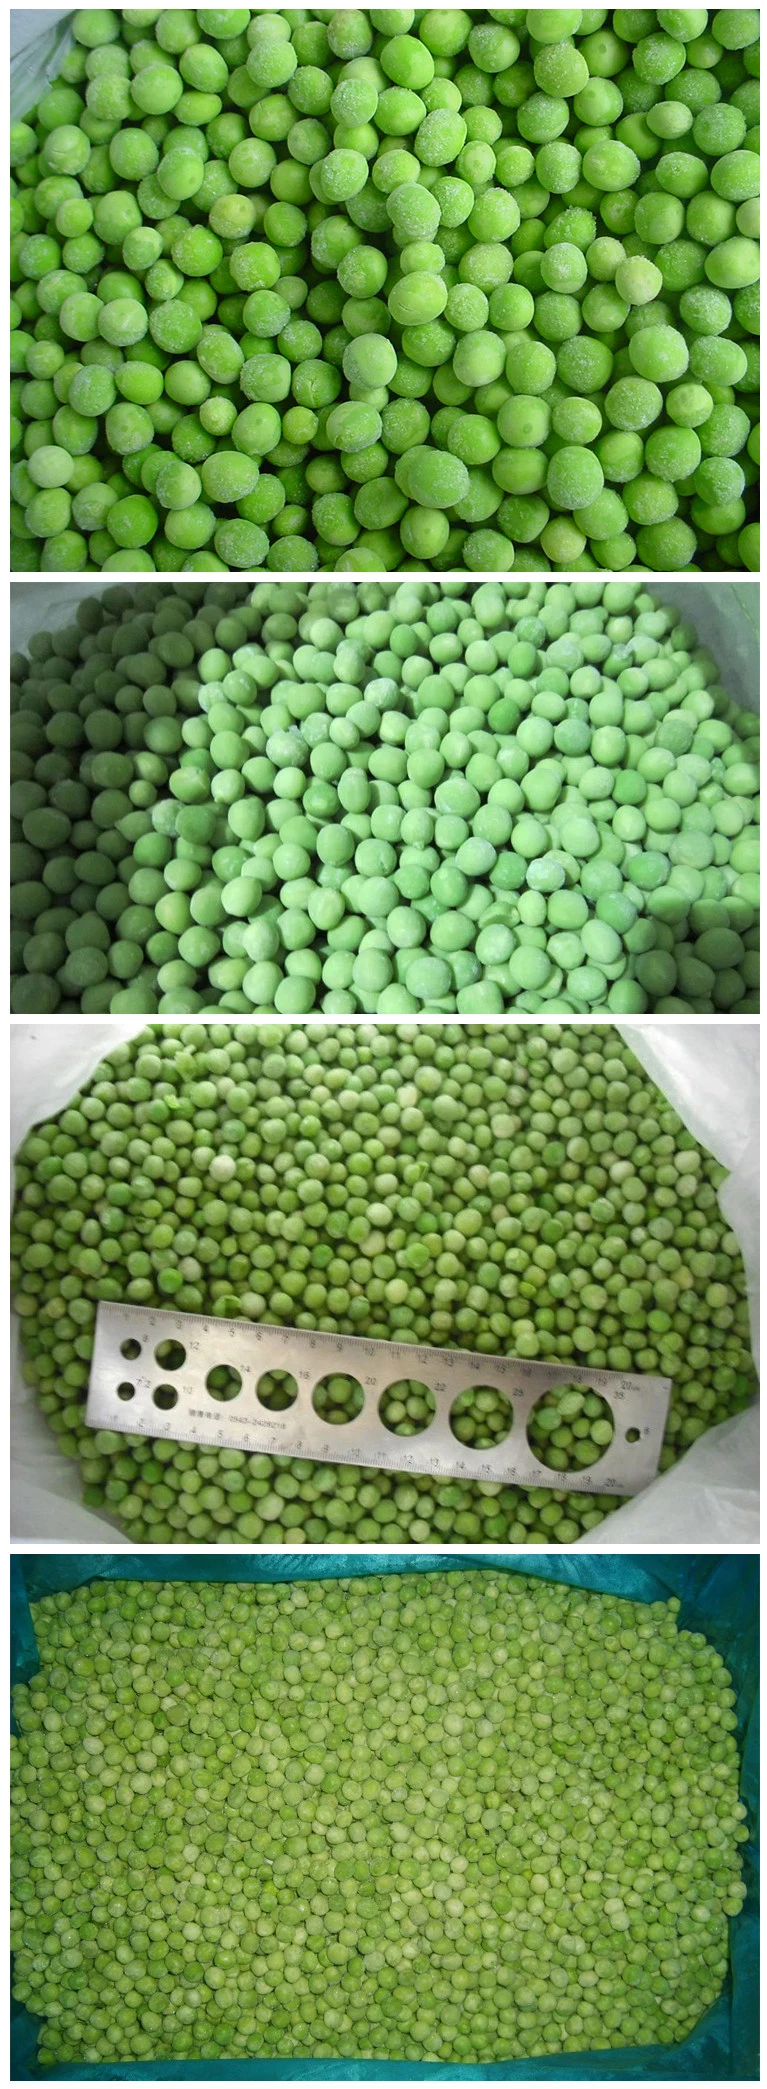 New Crop Fresh Frozen Vegetables Fresh Deep Frozen Green Peas